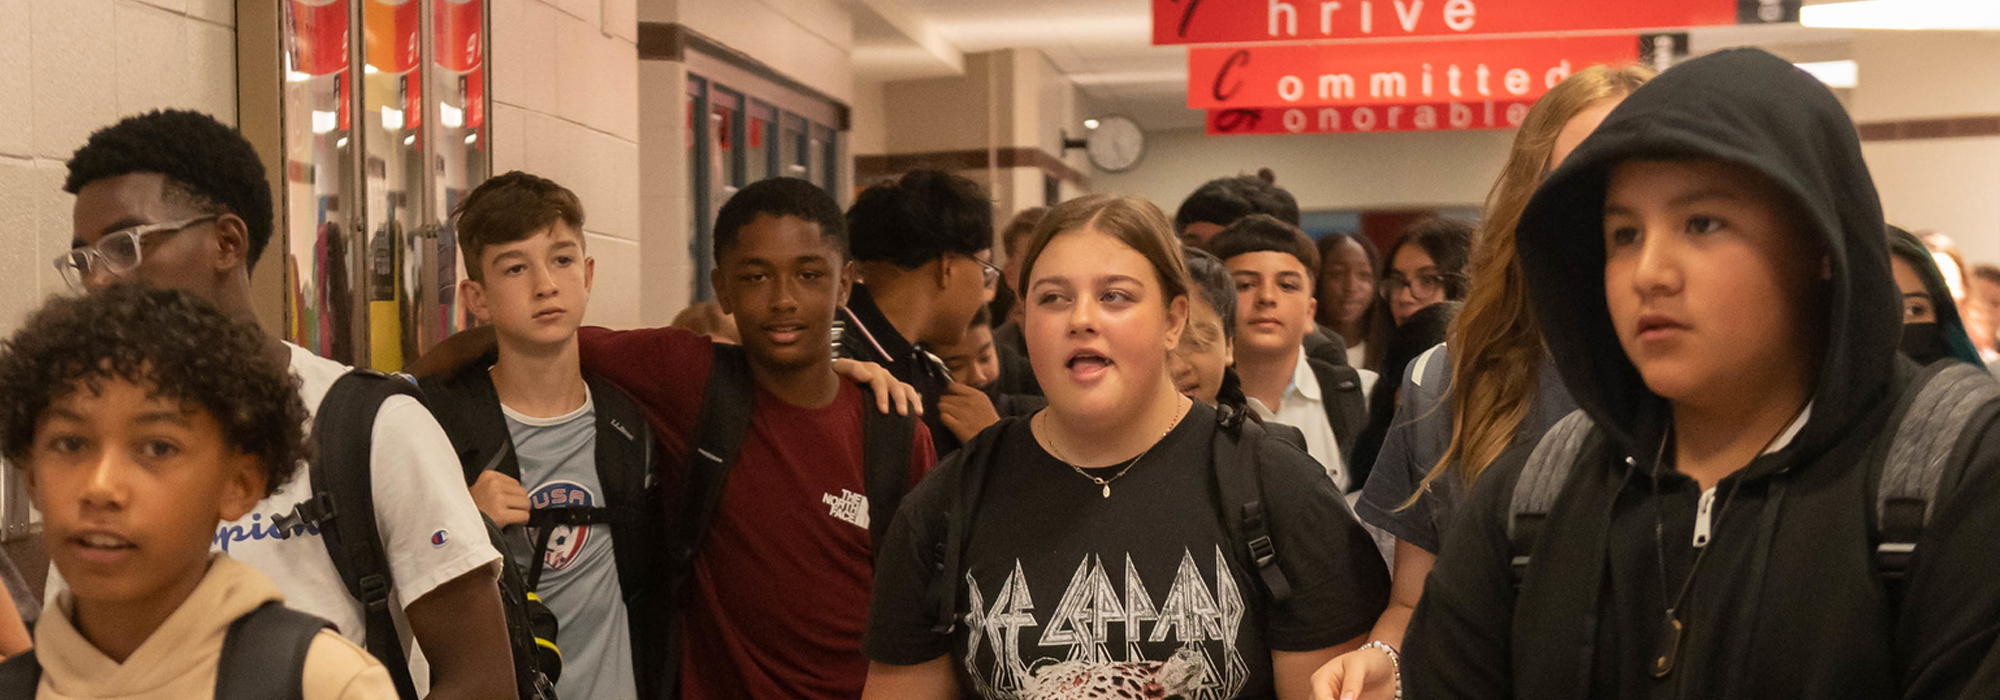 students walk in hallway